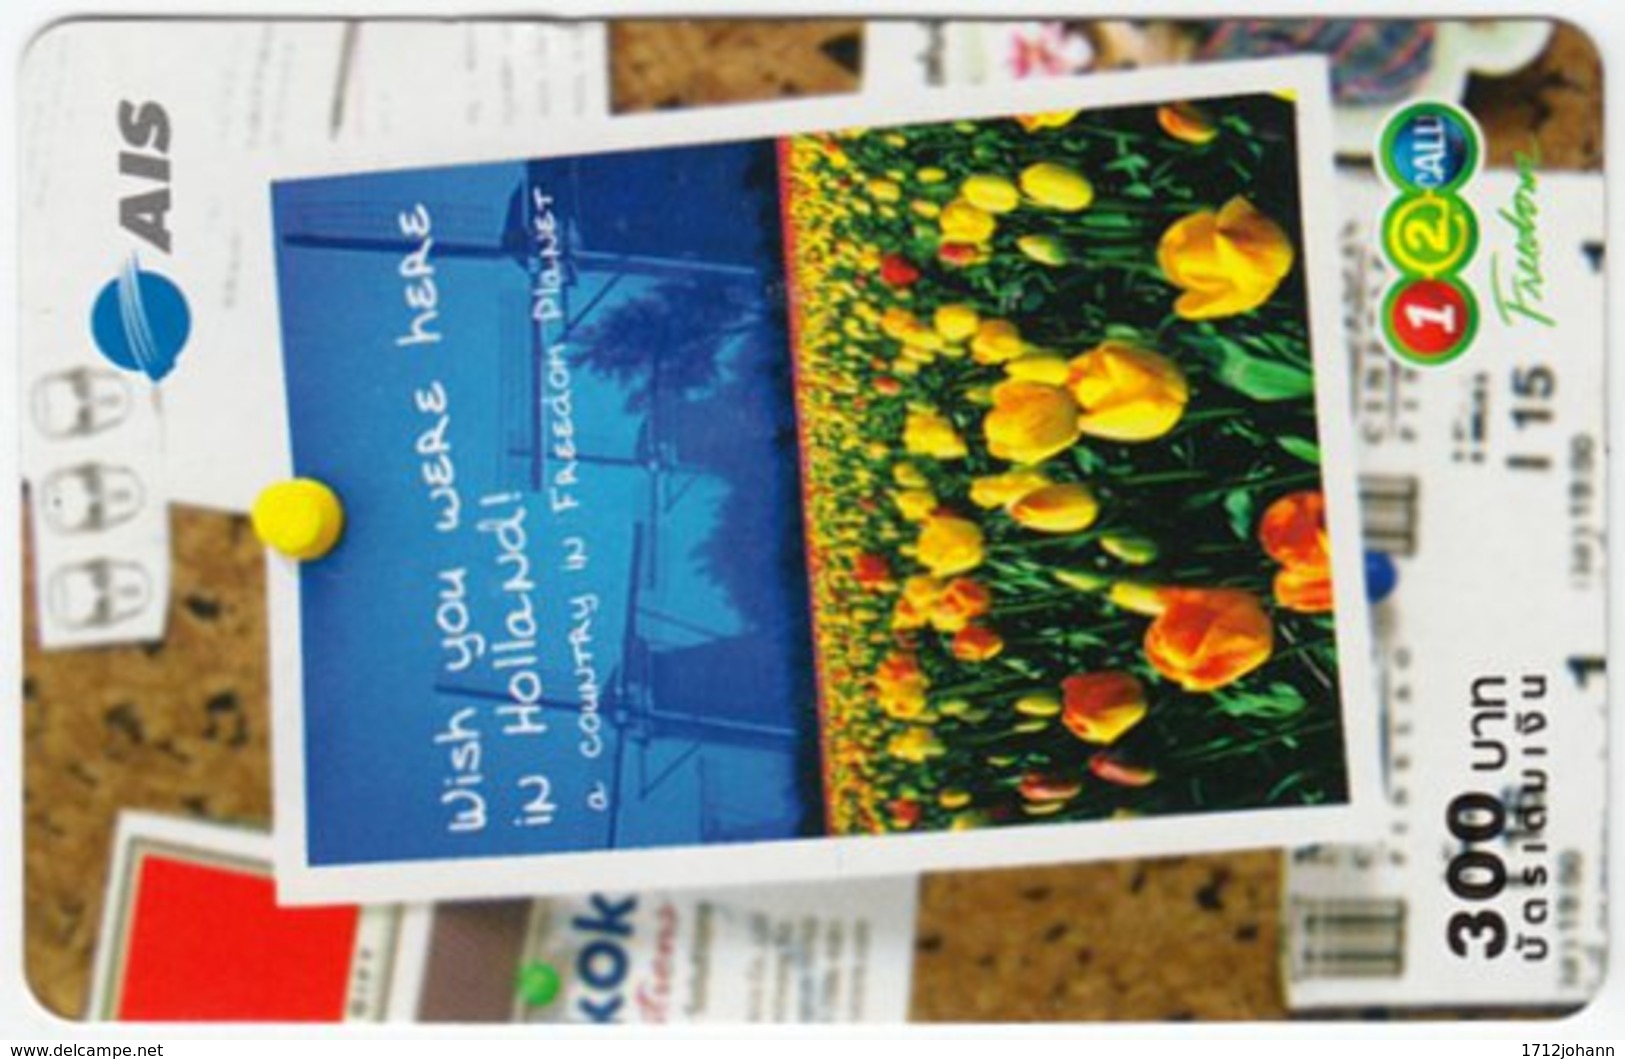 THAILAND C-809 Prepaid 1-2-call/AIS - Landmark, Plant, Flower, Tulips, Netherlands - Used - Thailand